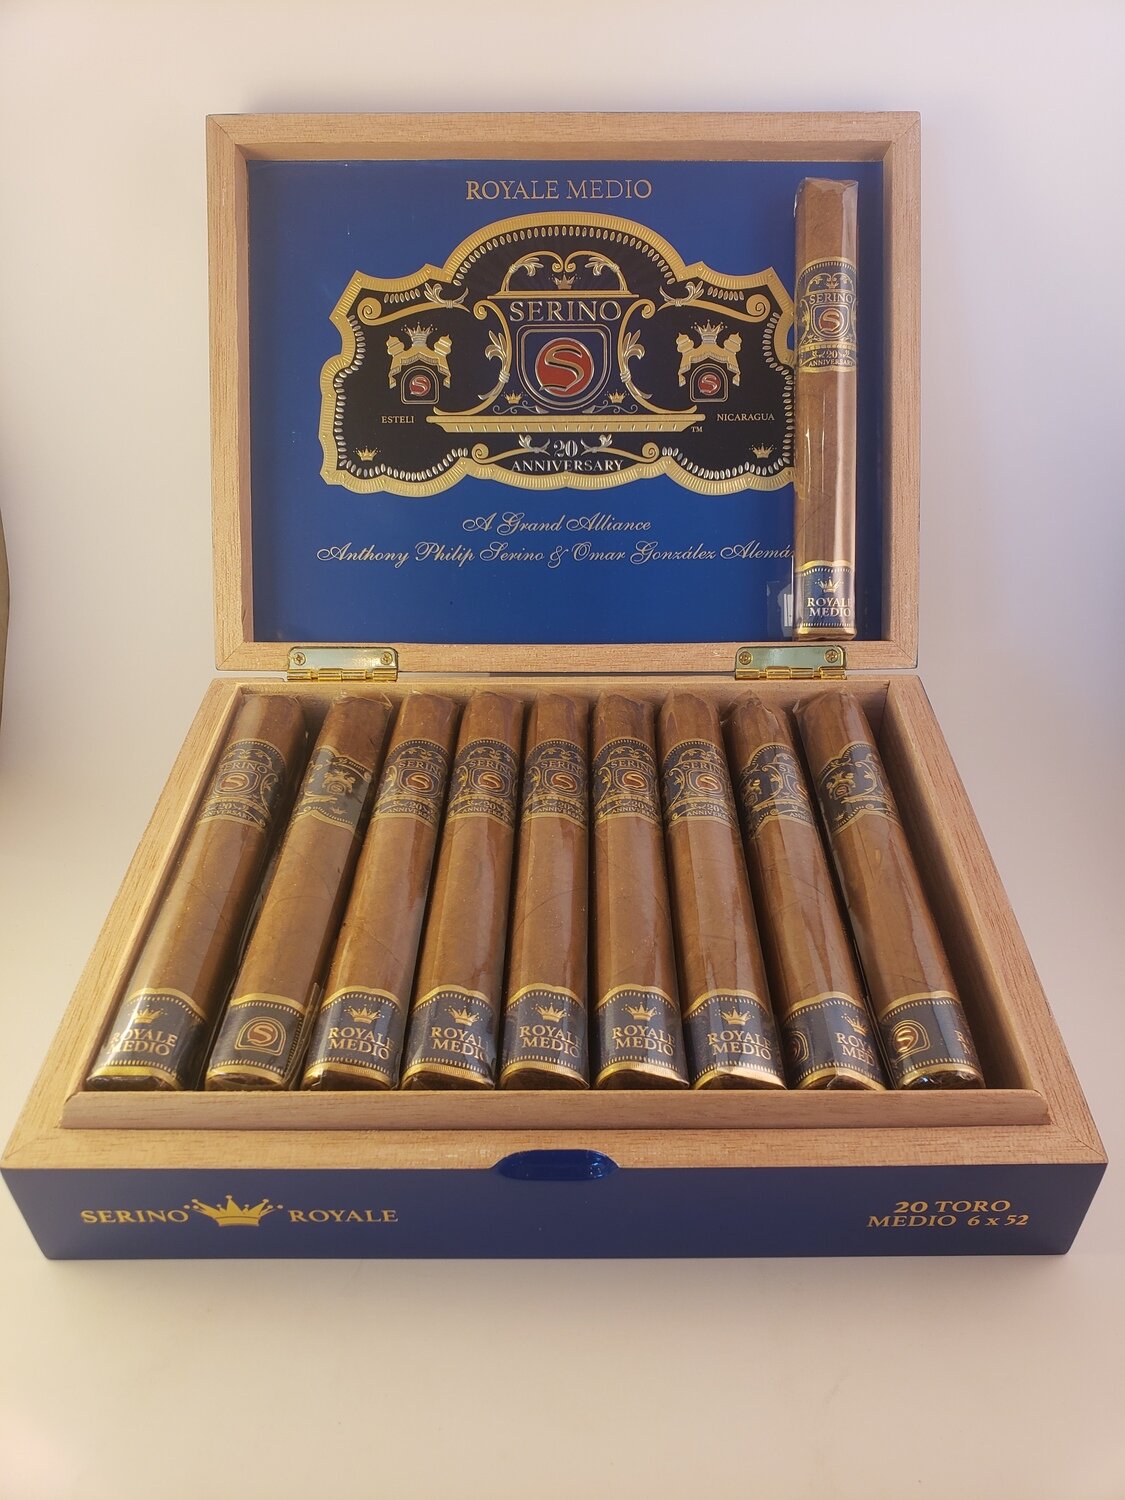 Serino Royale Medio Robusto Gordo 5 1/2 x 60 Single Cigar